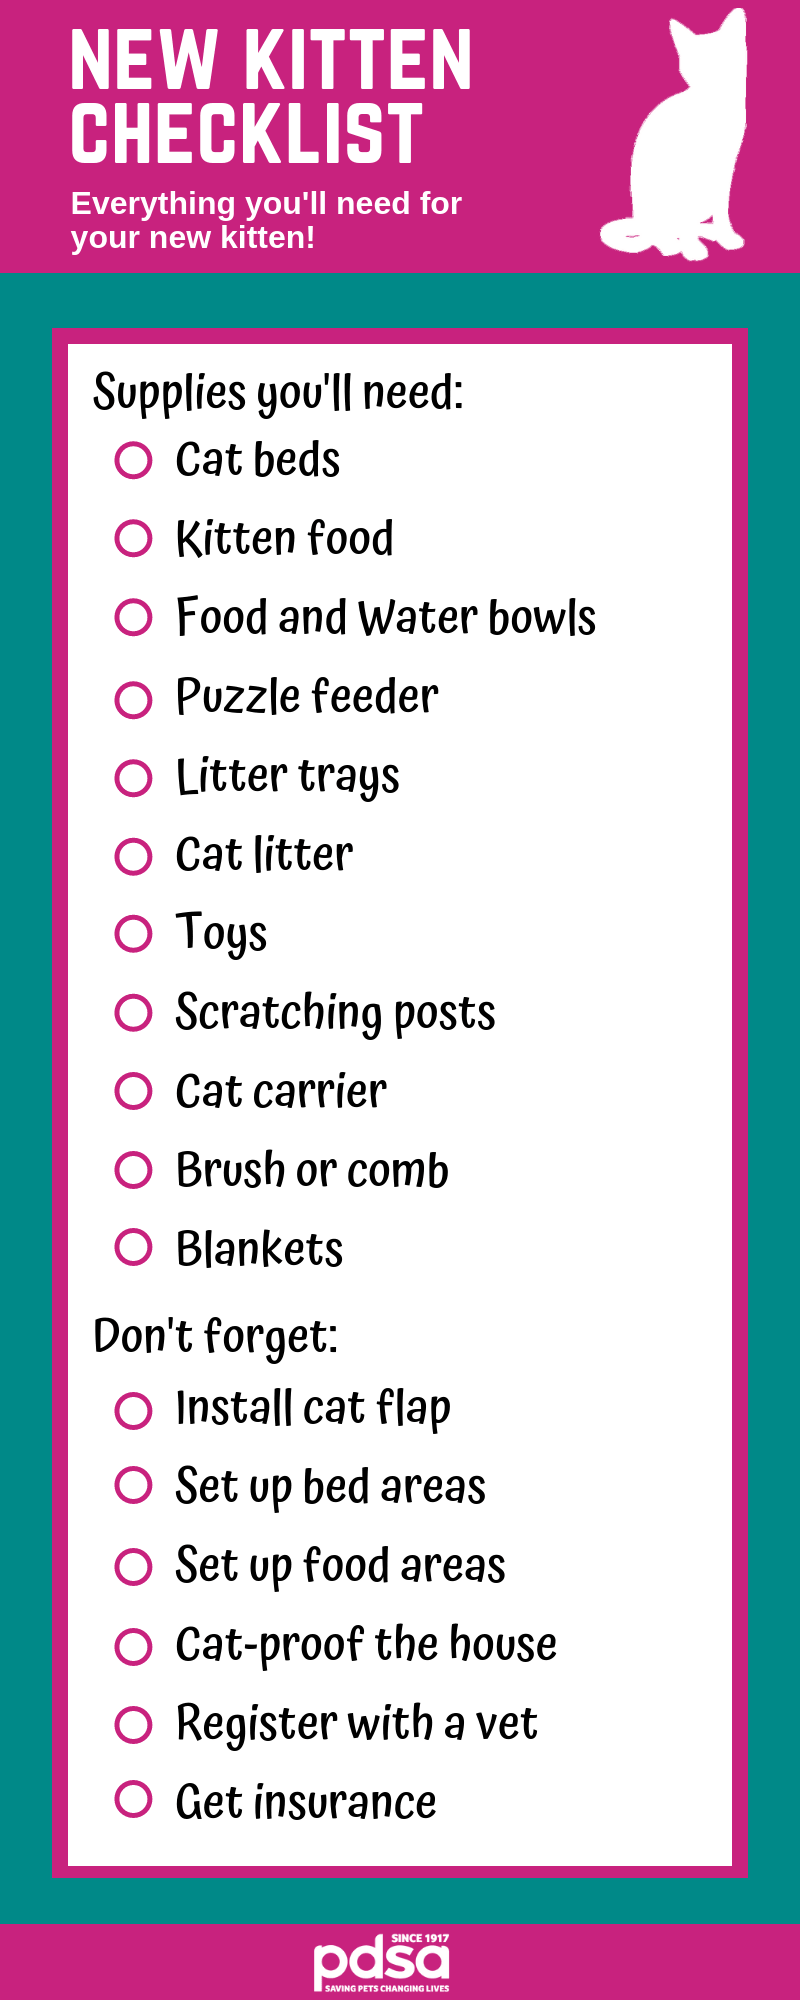 kitten supplies uk